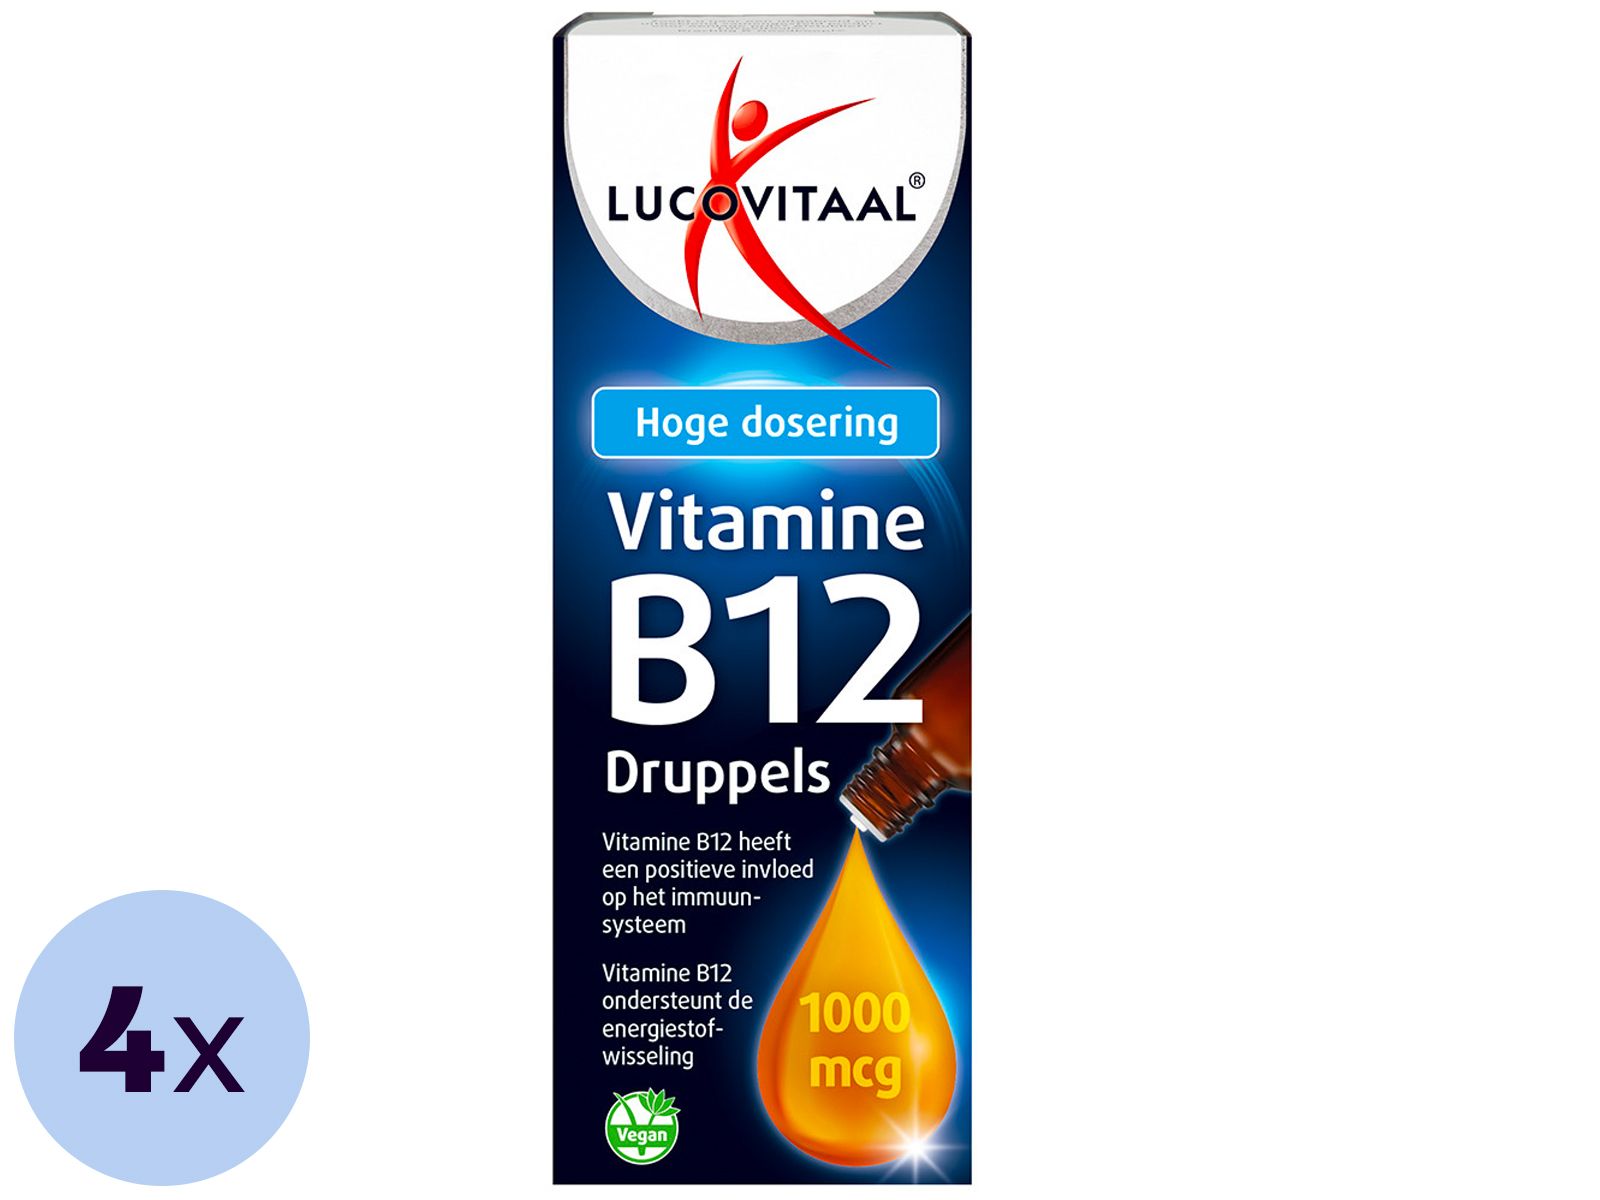 4x-50-ml-lucovitaal-vitamine-b12-druppels